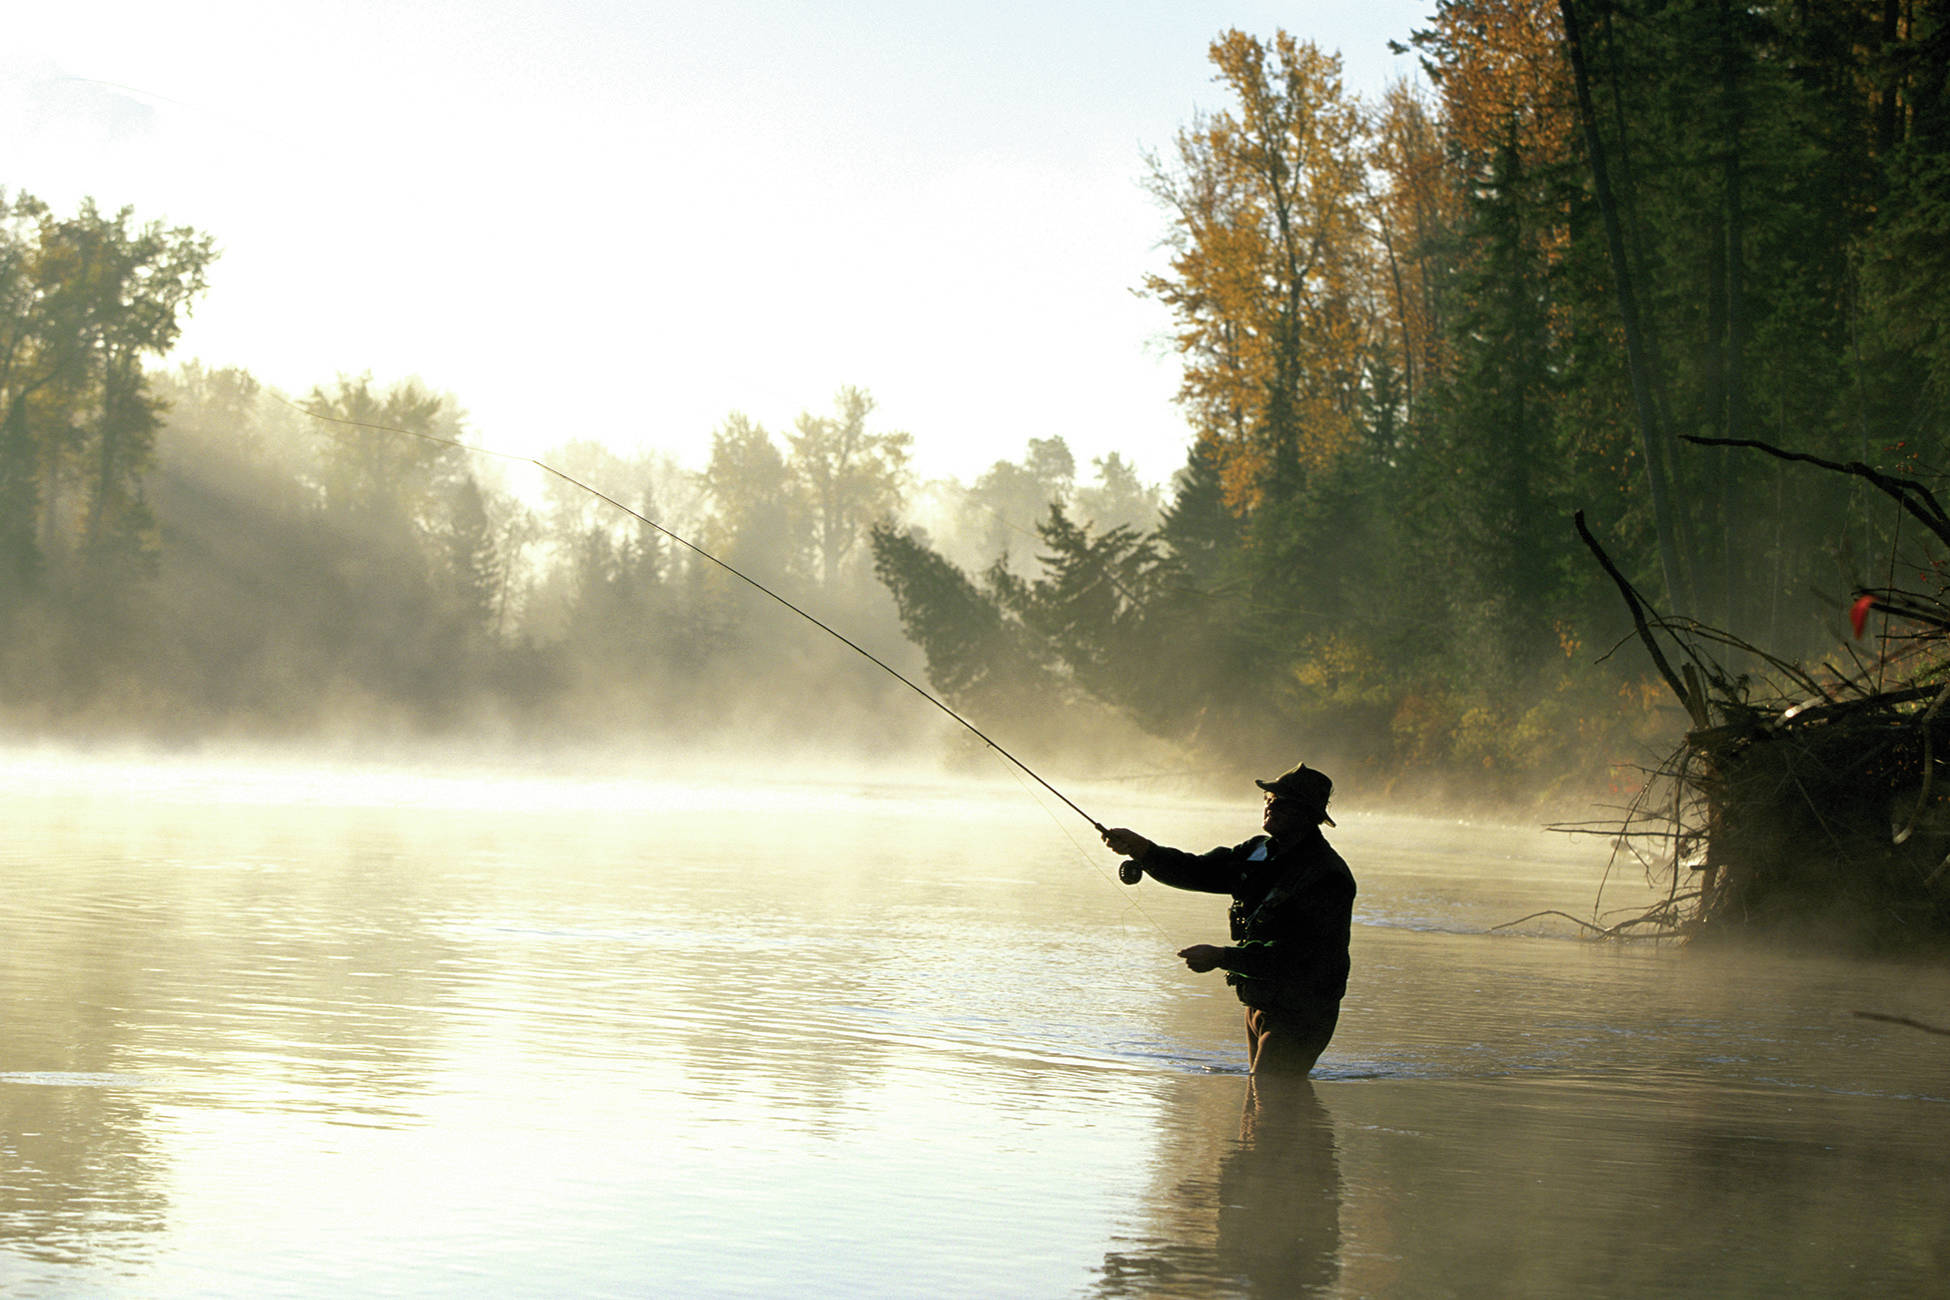 Fly fishing season to start on the Elk River - Fernie BC News